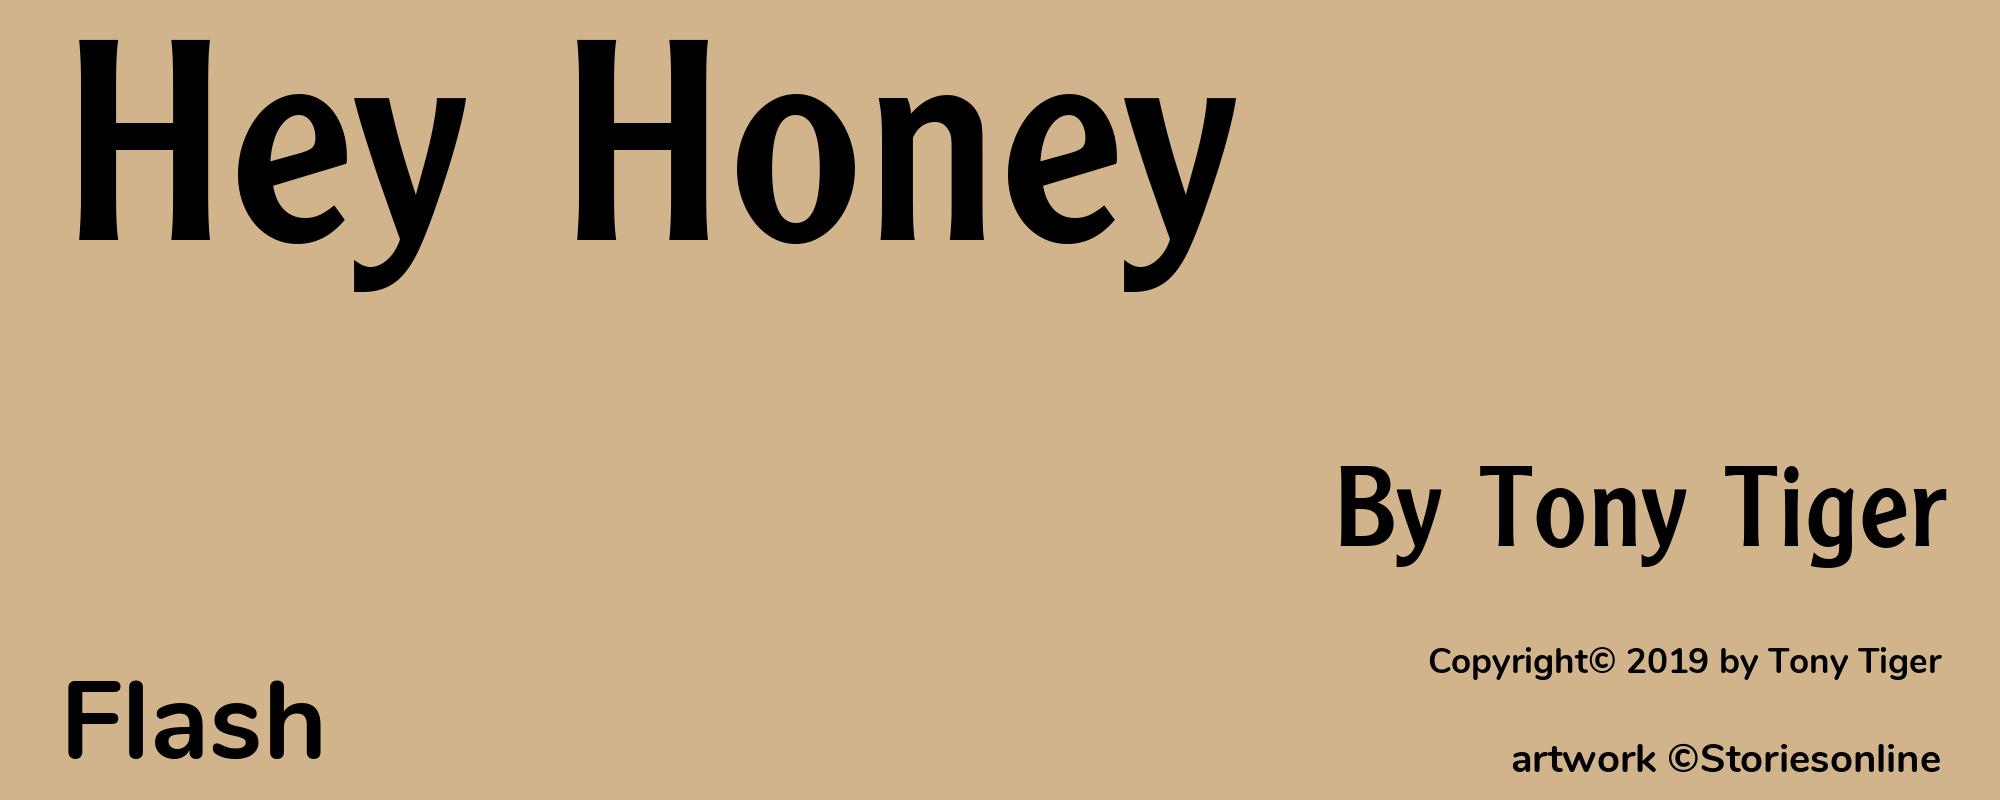 Hey Honey - Cover